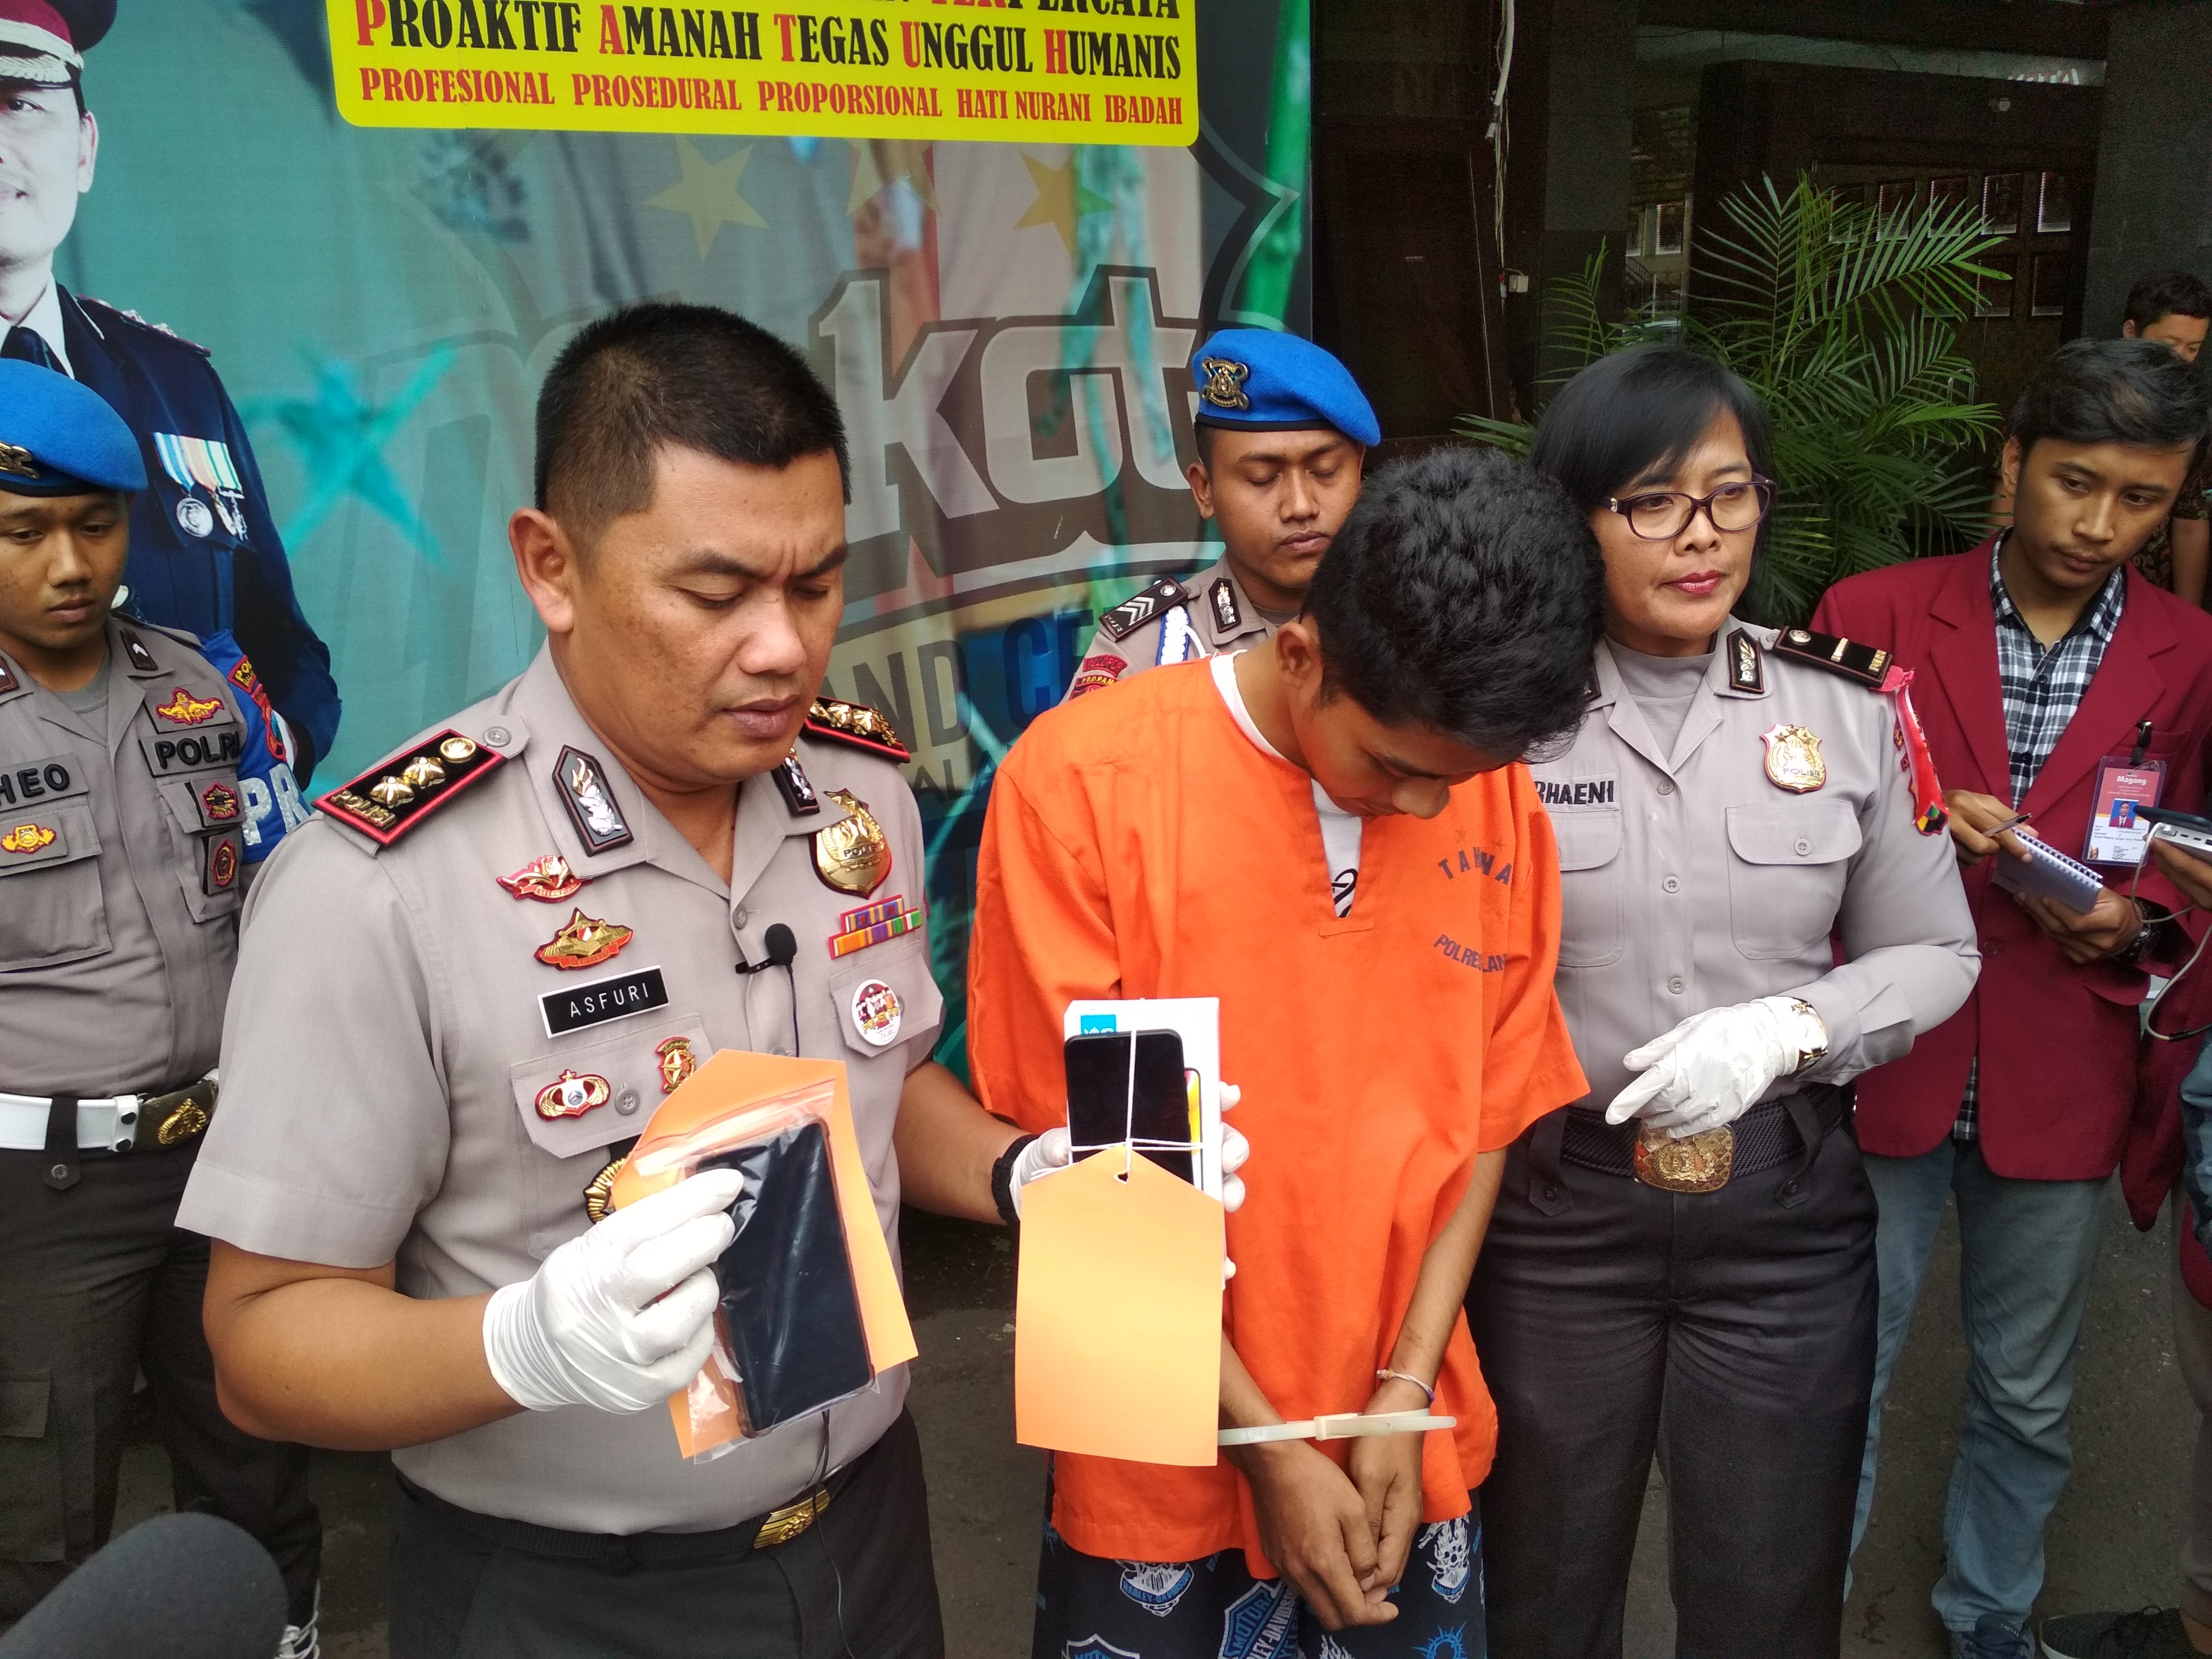 Gelar perkara kasus penipuan di Polres Malang Kota.